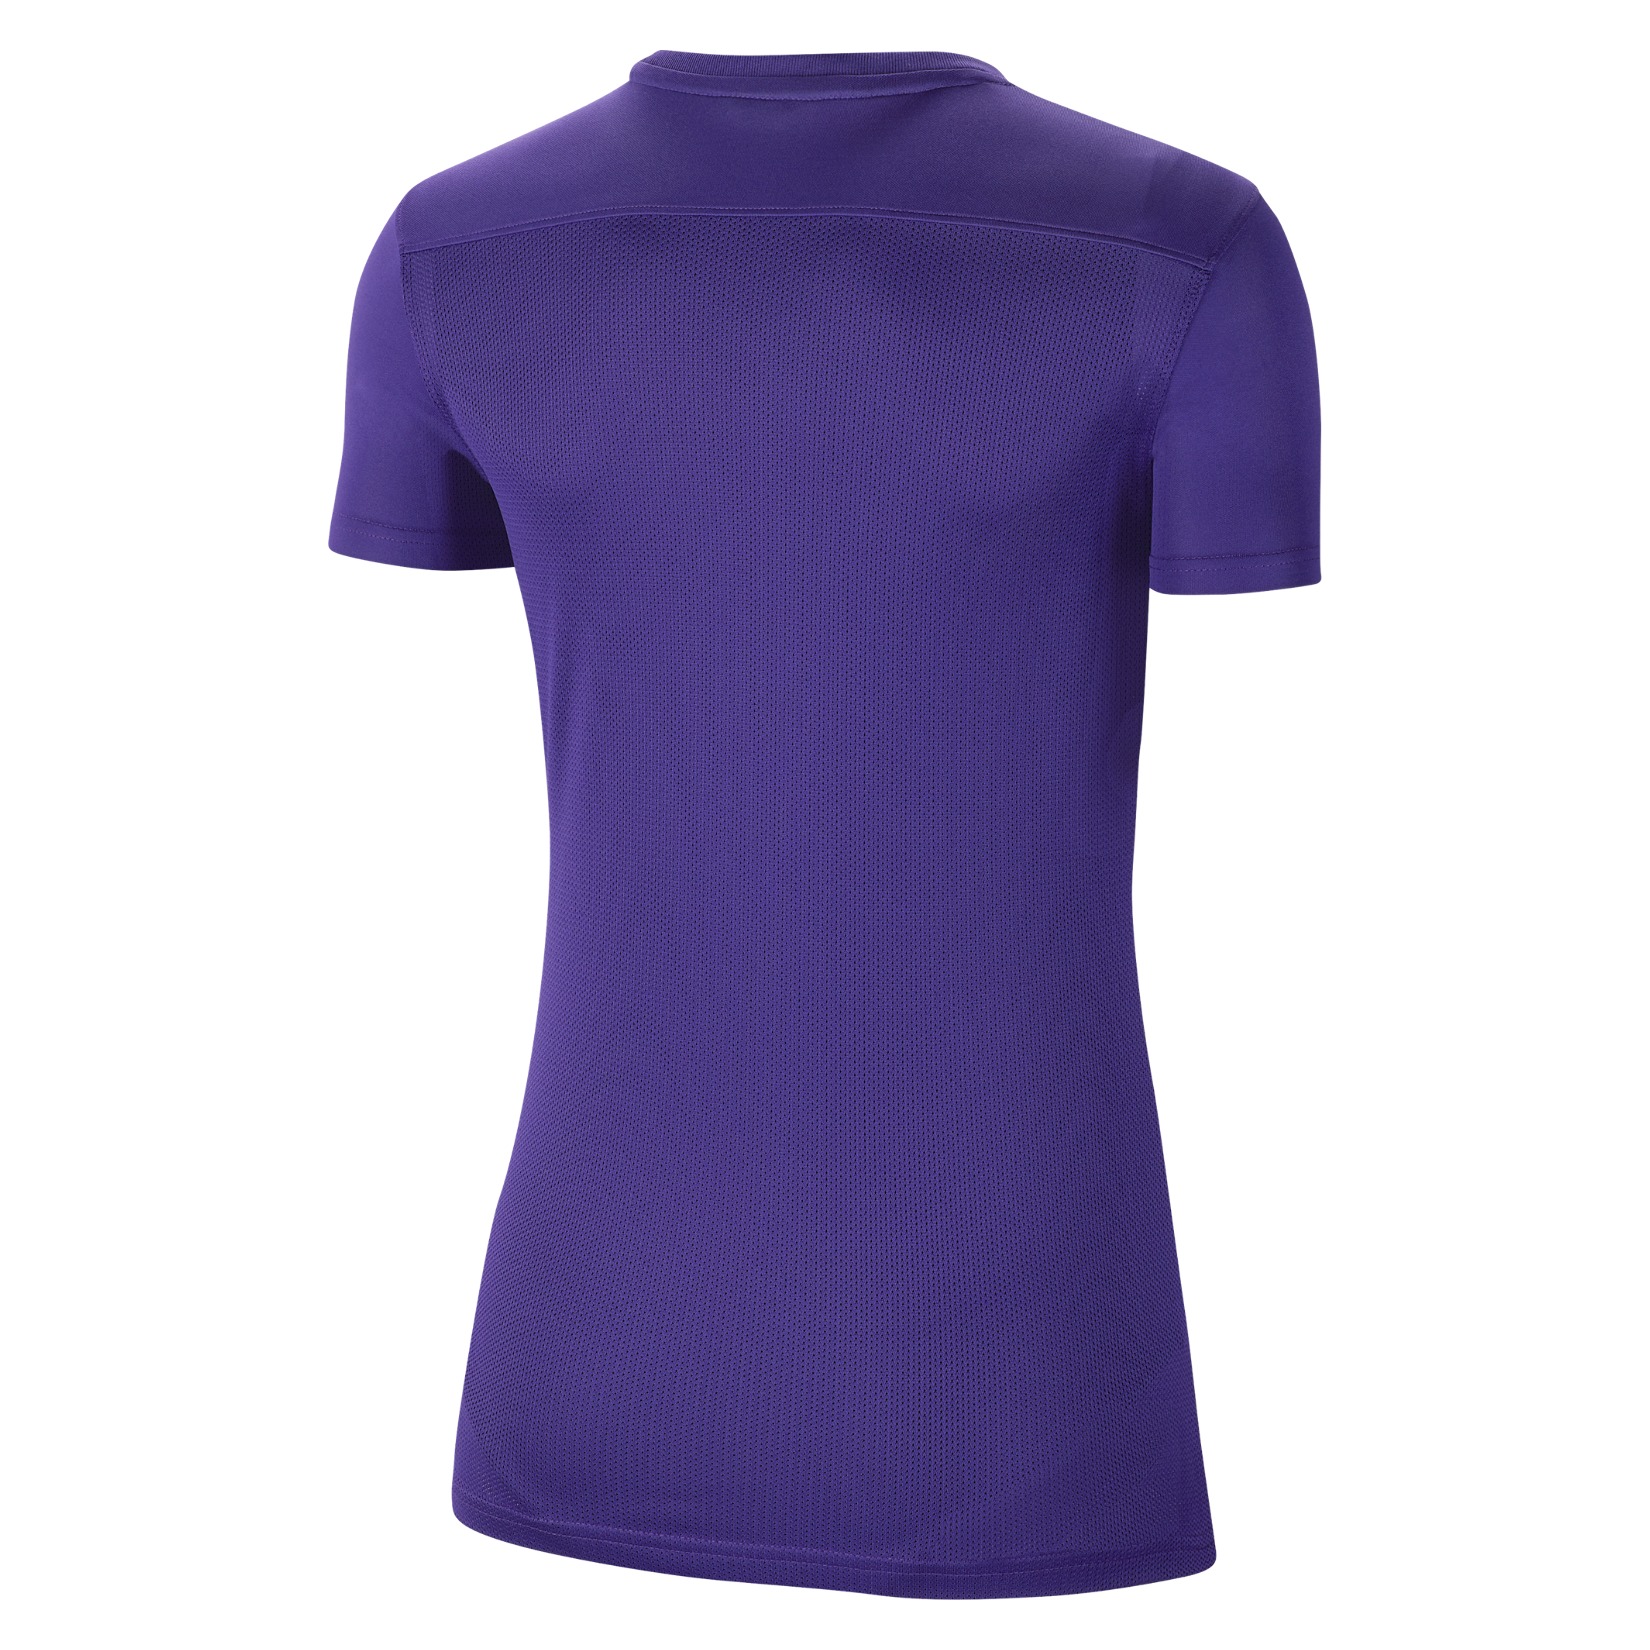 Nike Womens Park VII Dri-FIT Short Sleeve Shirt (W) Court Purple-White